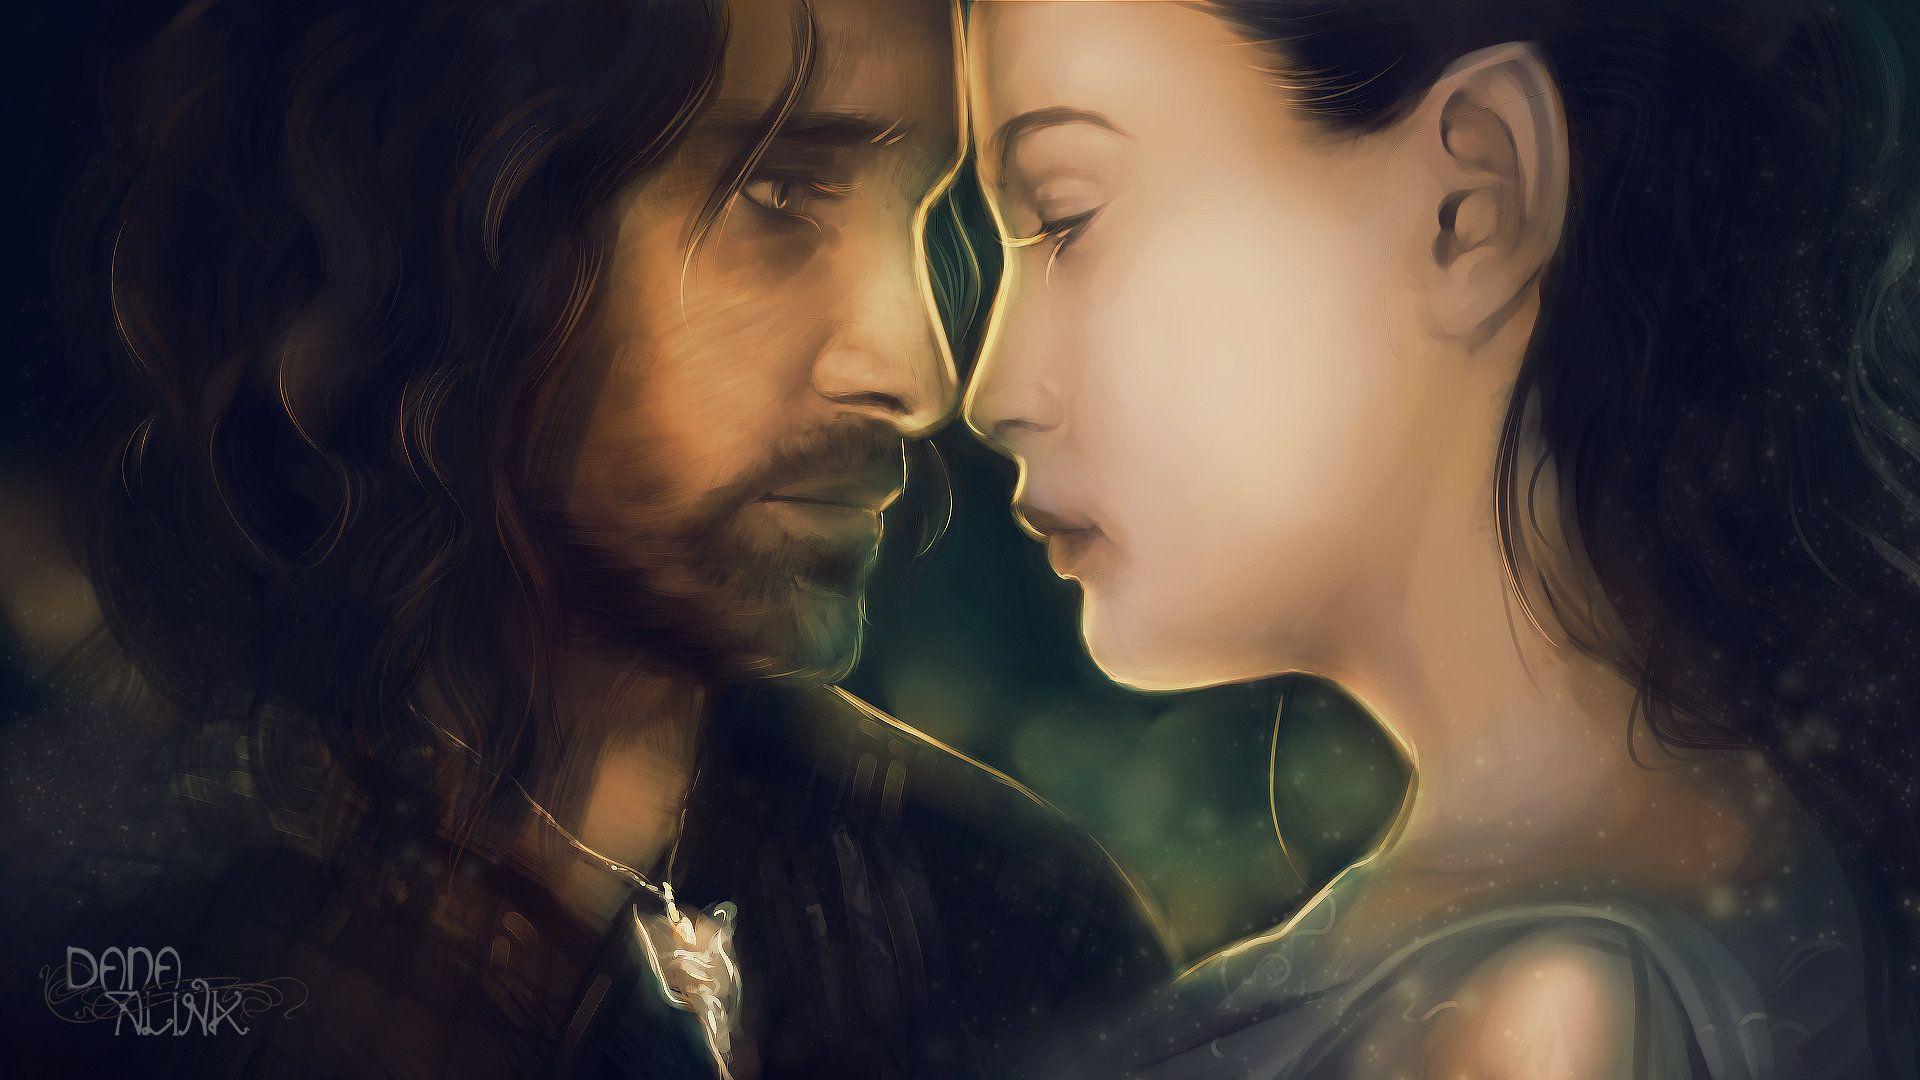 Fan Art Friday: Aragorn And Arwen, Dana Alink